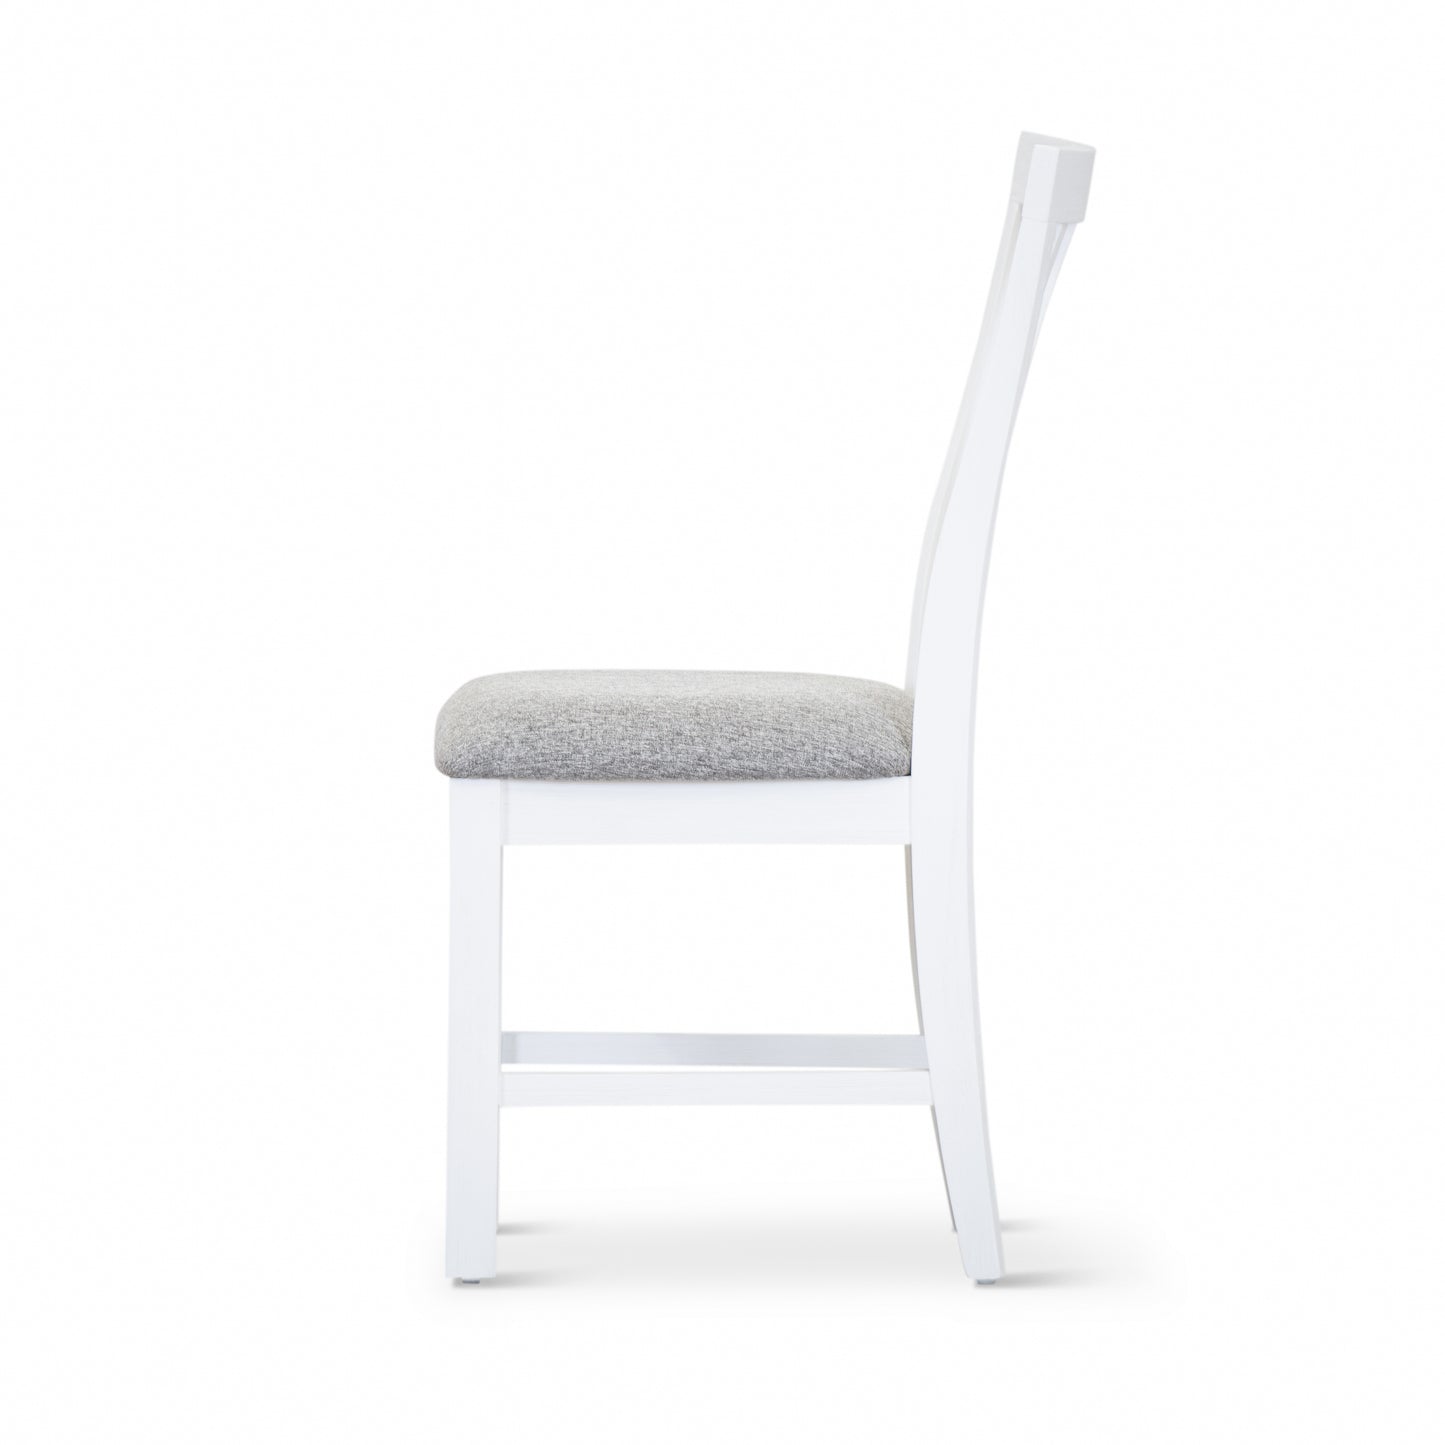 Laelia Dining Chair Set of 4 Solid Acacia Timber Wood Coastal Furniture - White